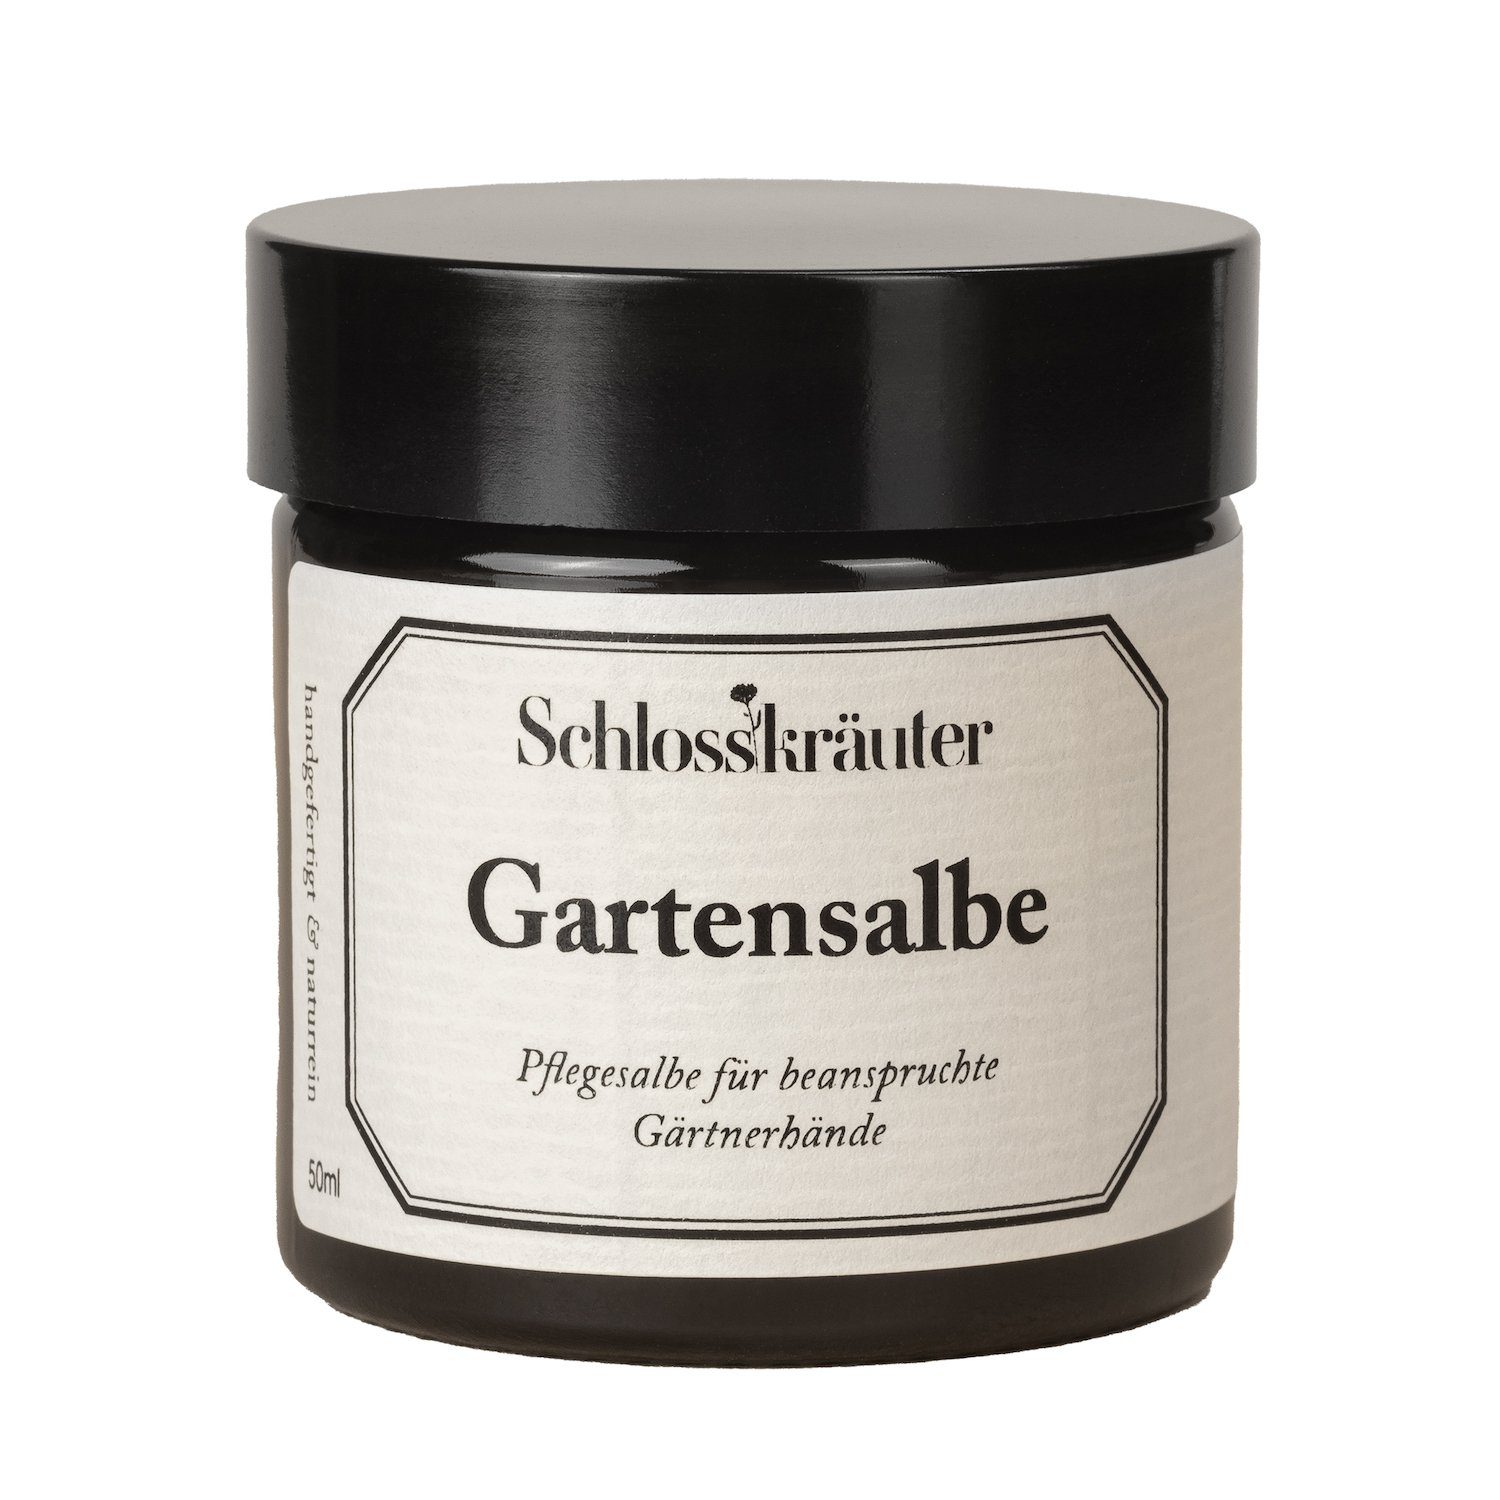 Schlosskräuter Handcreme Gartensalbe 50ml | Handcremes